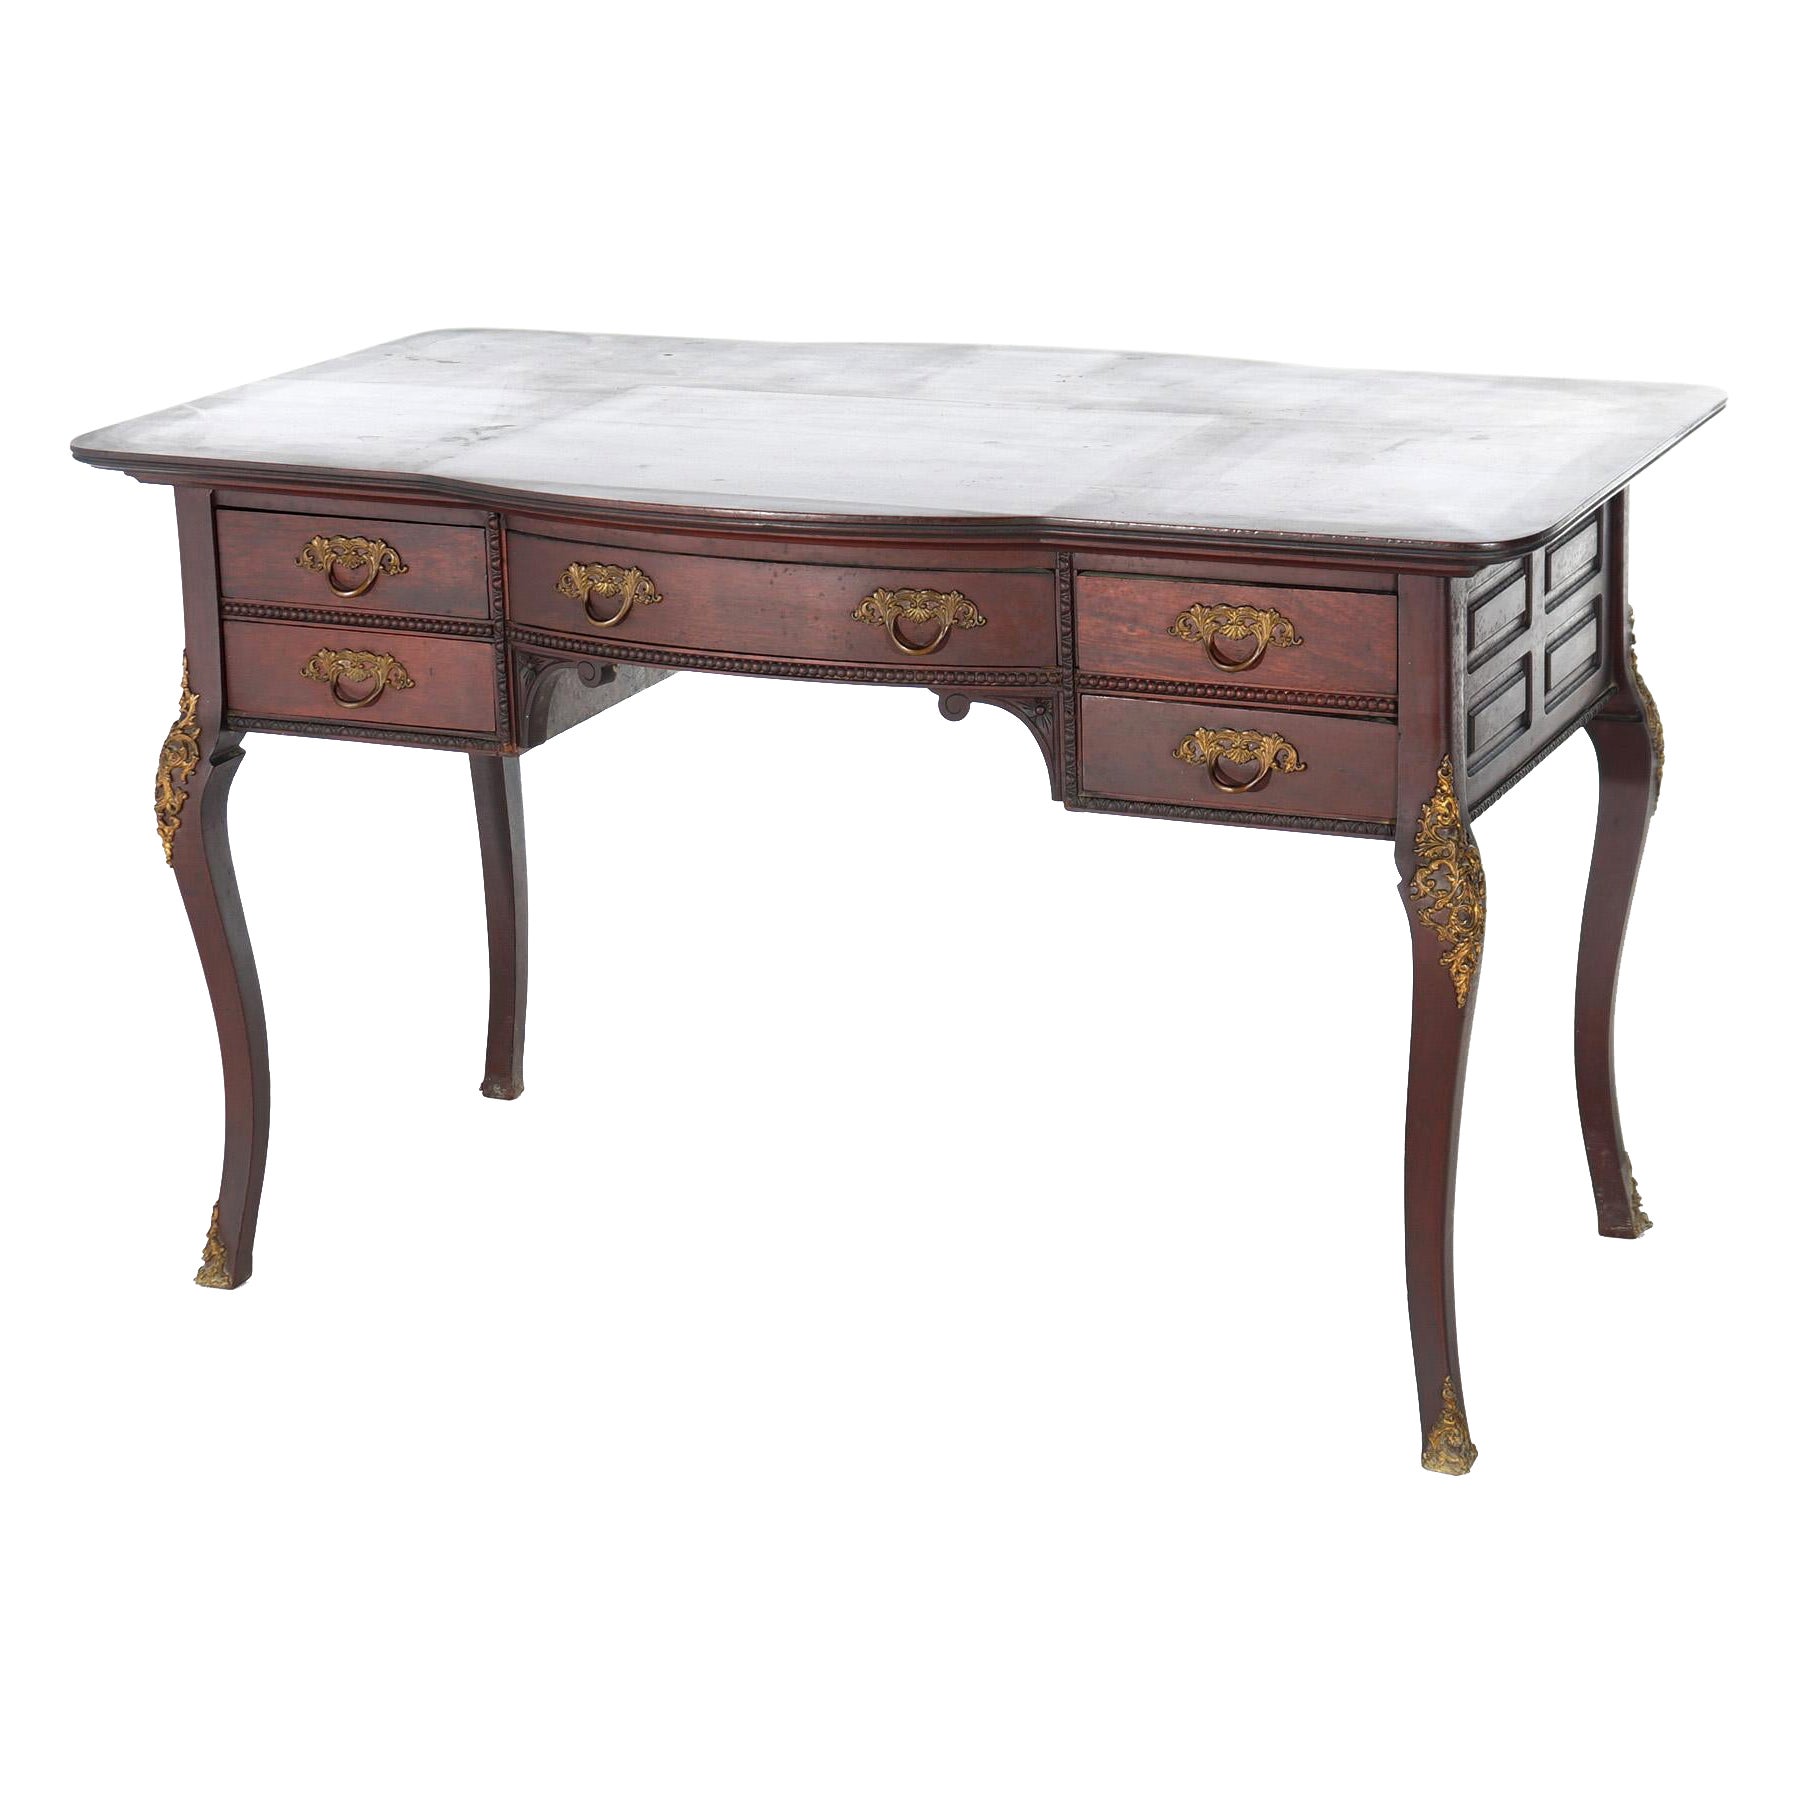 Antique French Mahogany & Ormolu Bureau Plat Writing Desk C1910 For Sale